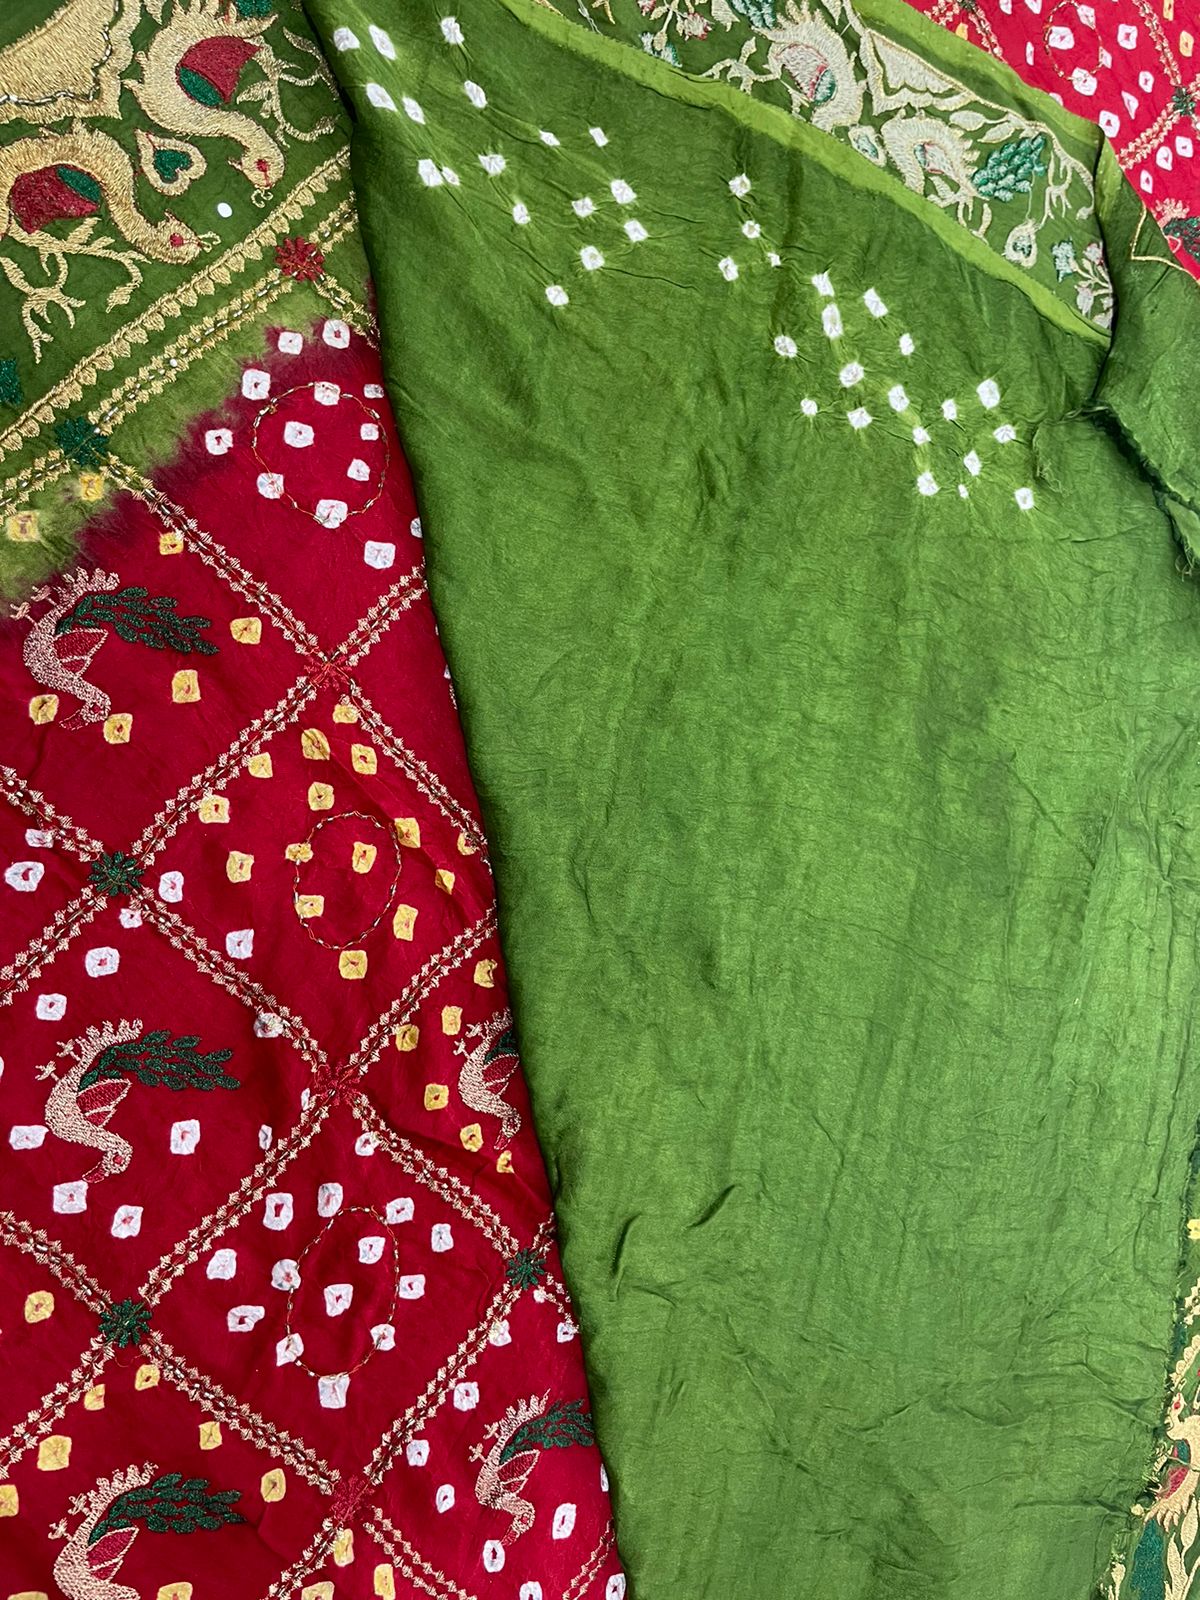 Pure Gazzi Silk with traditional Bandhani print and khatli mirror work